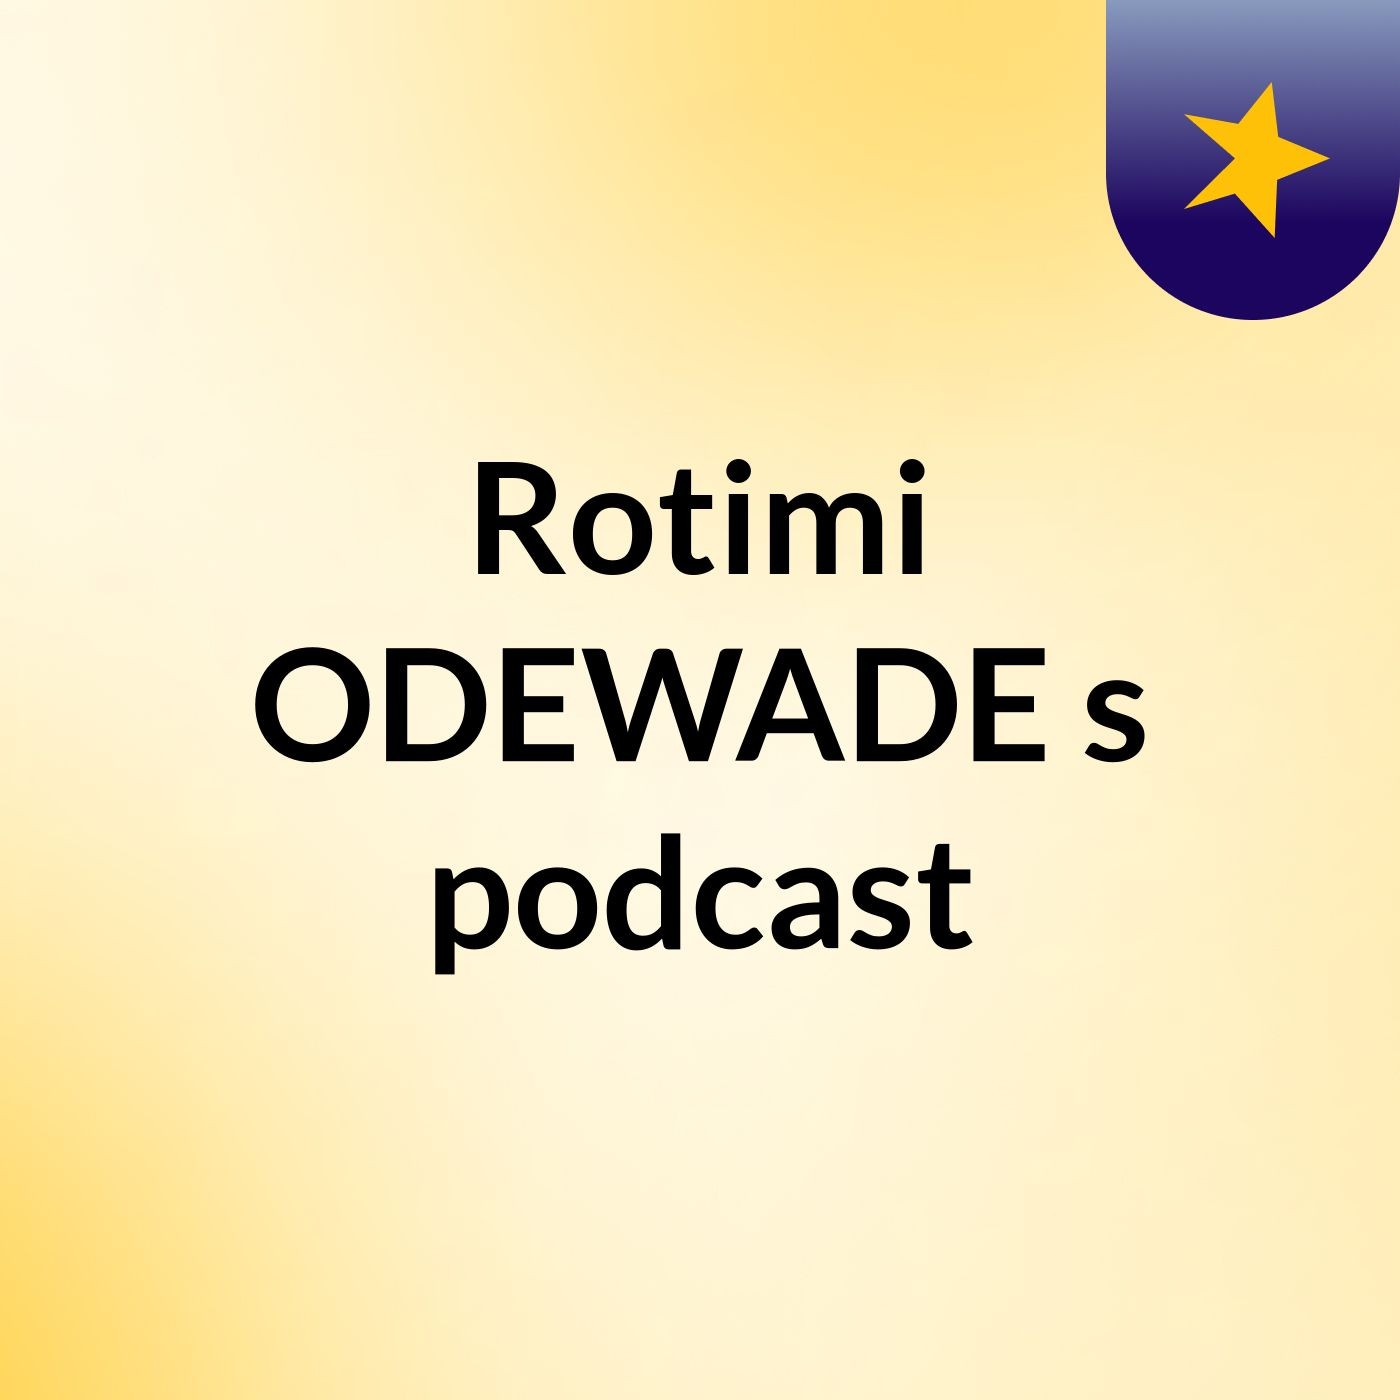 Rotimi ODEWADE's podcast